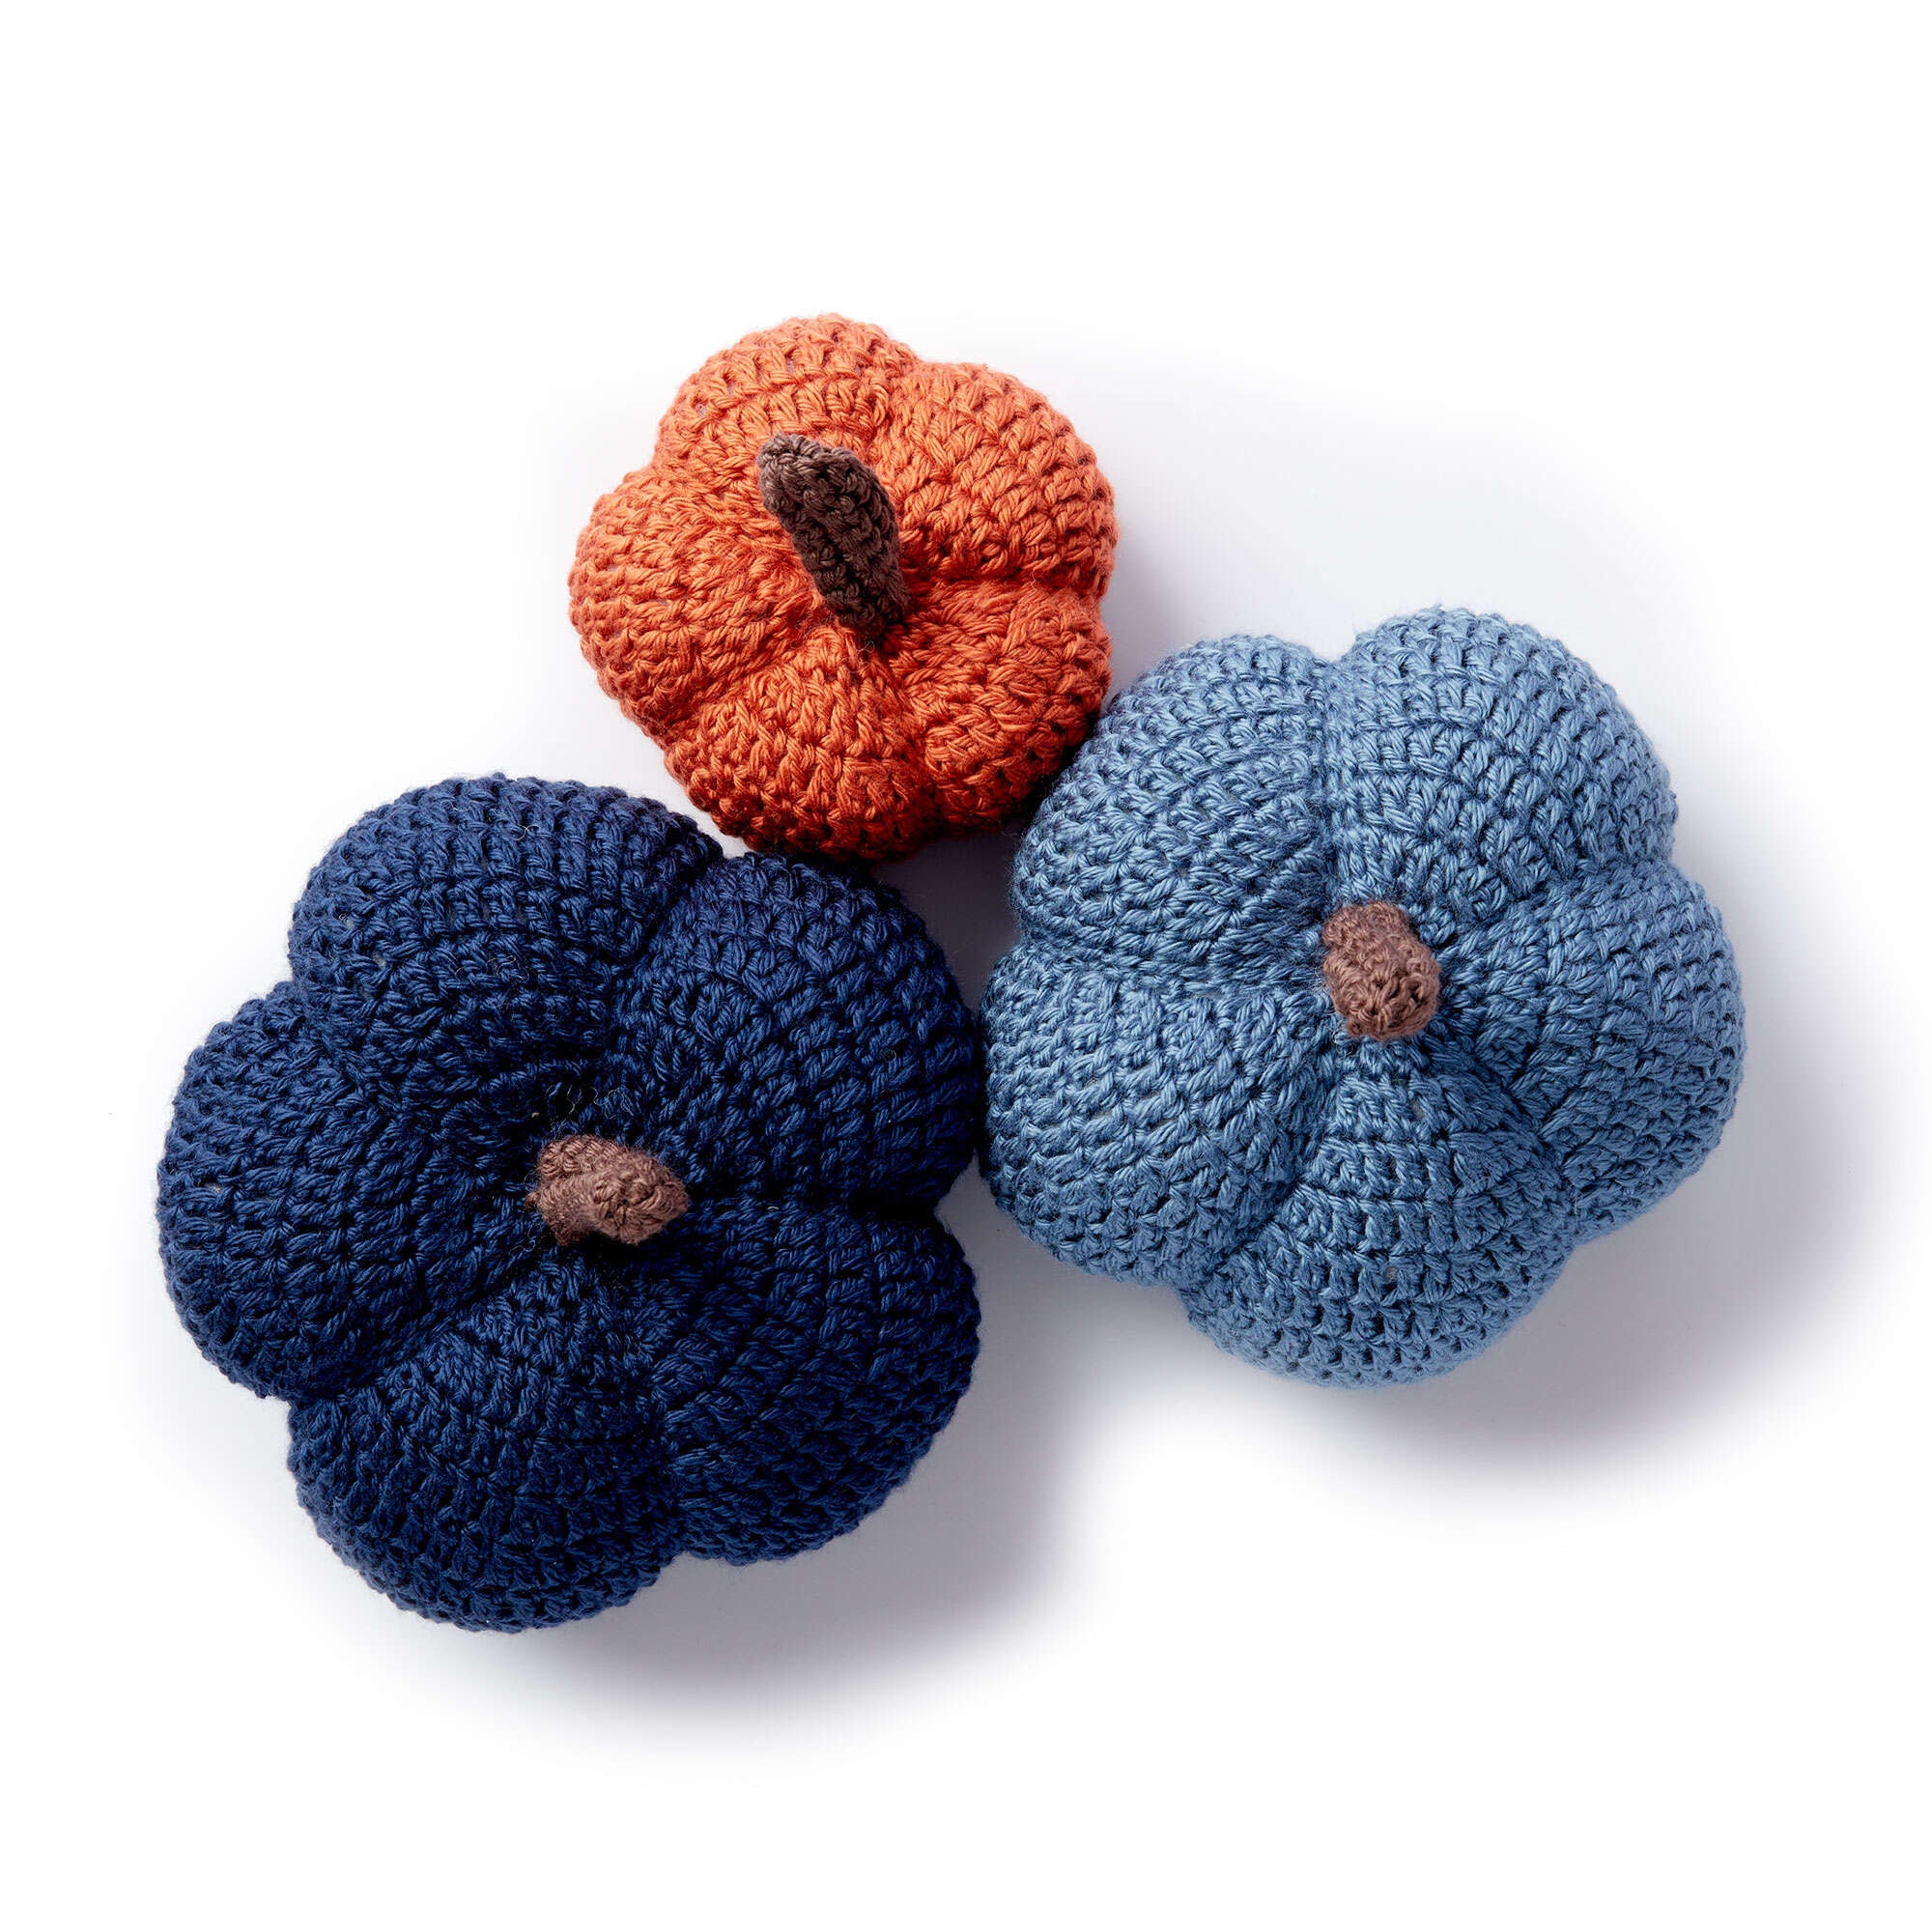 Free Pattern: Harvest Crochet Pumpkins in Caron Simply Soft yarn